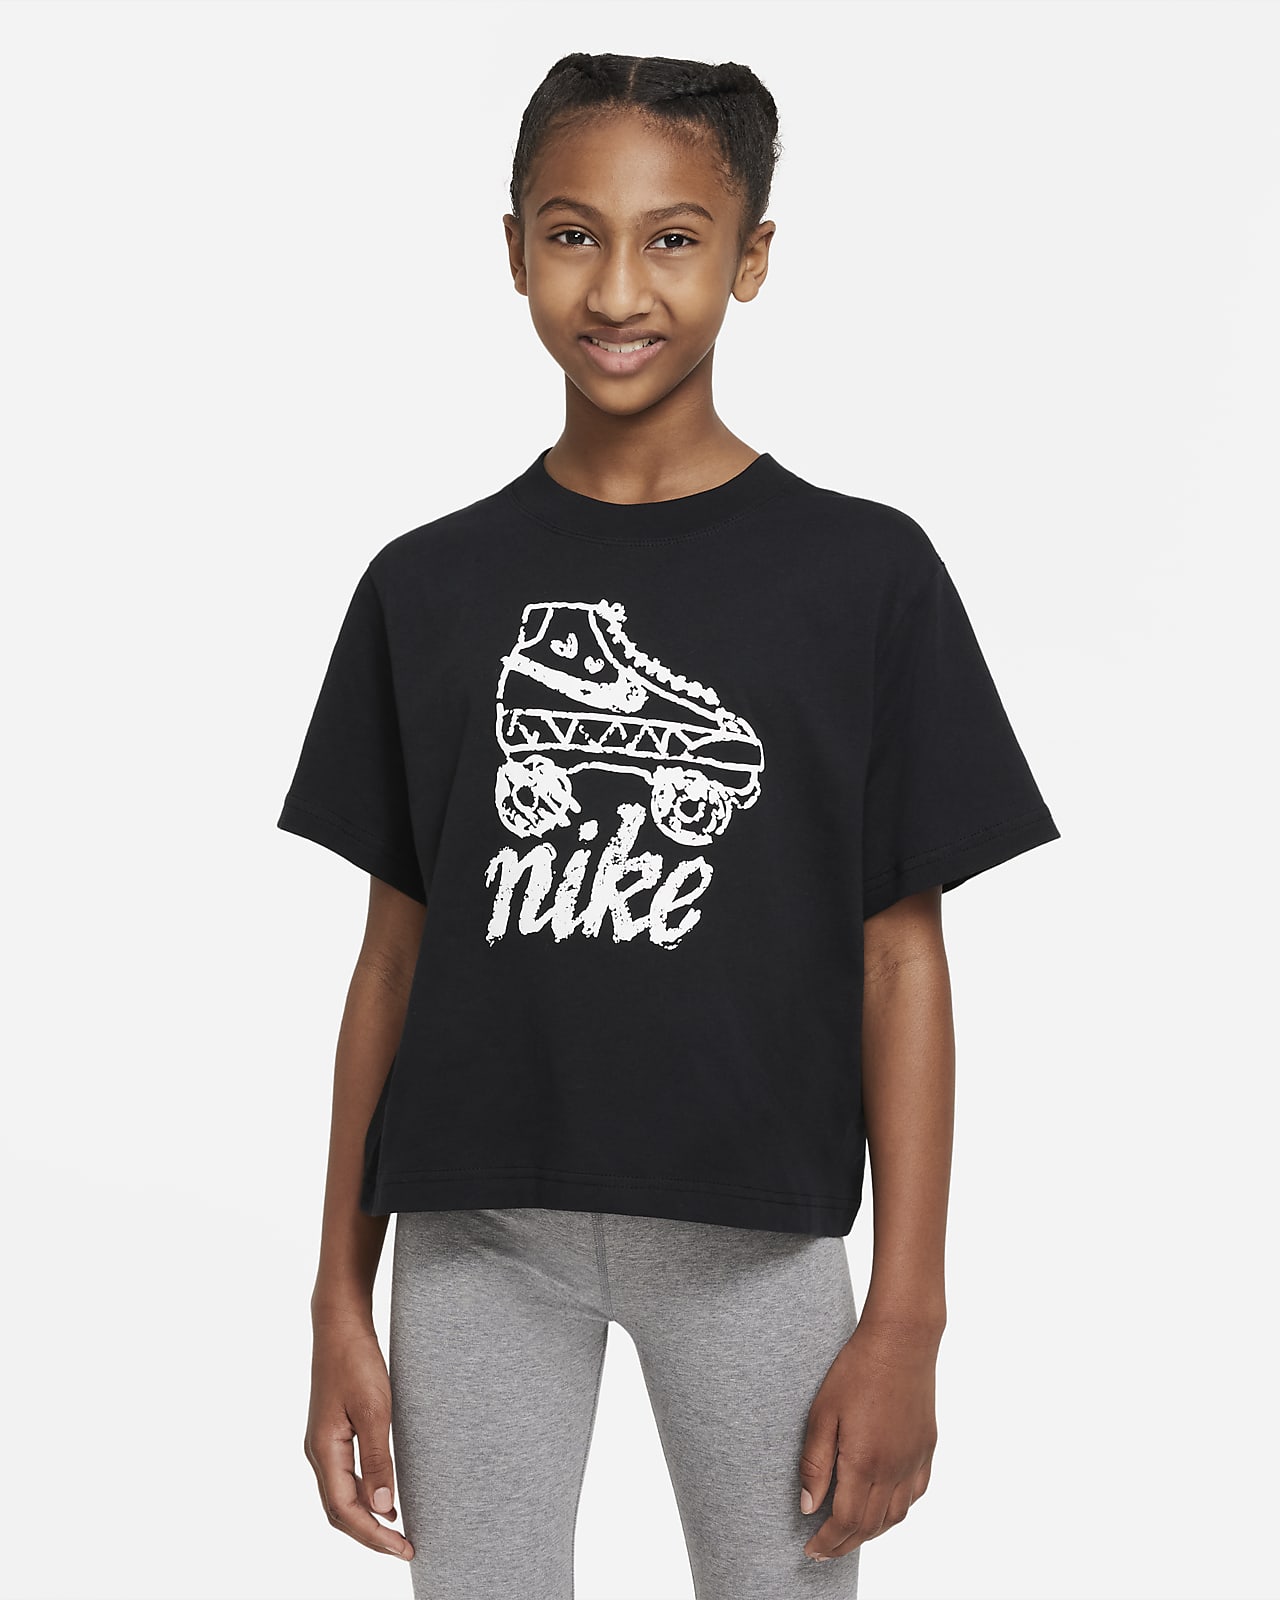 Nike公式 ナイキ スポーツウェア アイコン クラッシュ ジュニア ガールズ Tシャツ オンラインストア 通販サイト